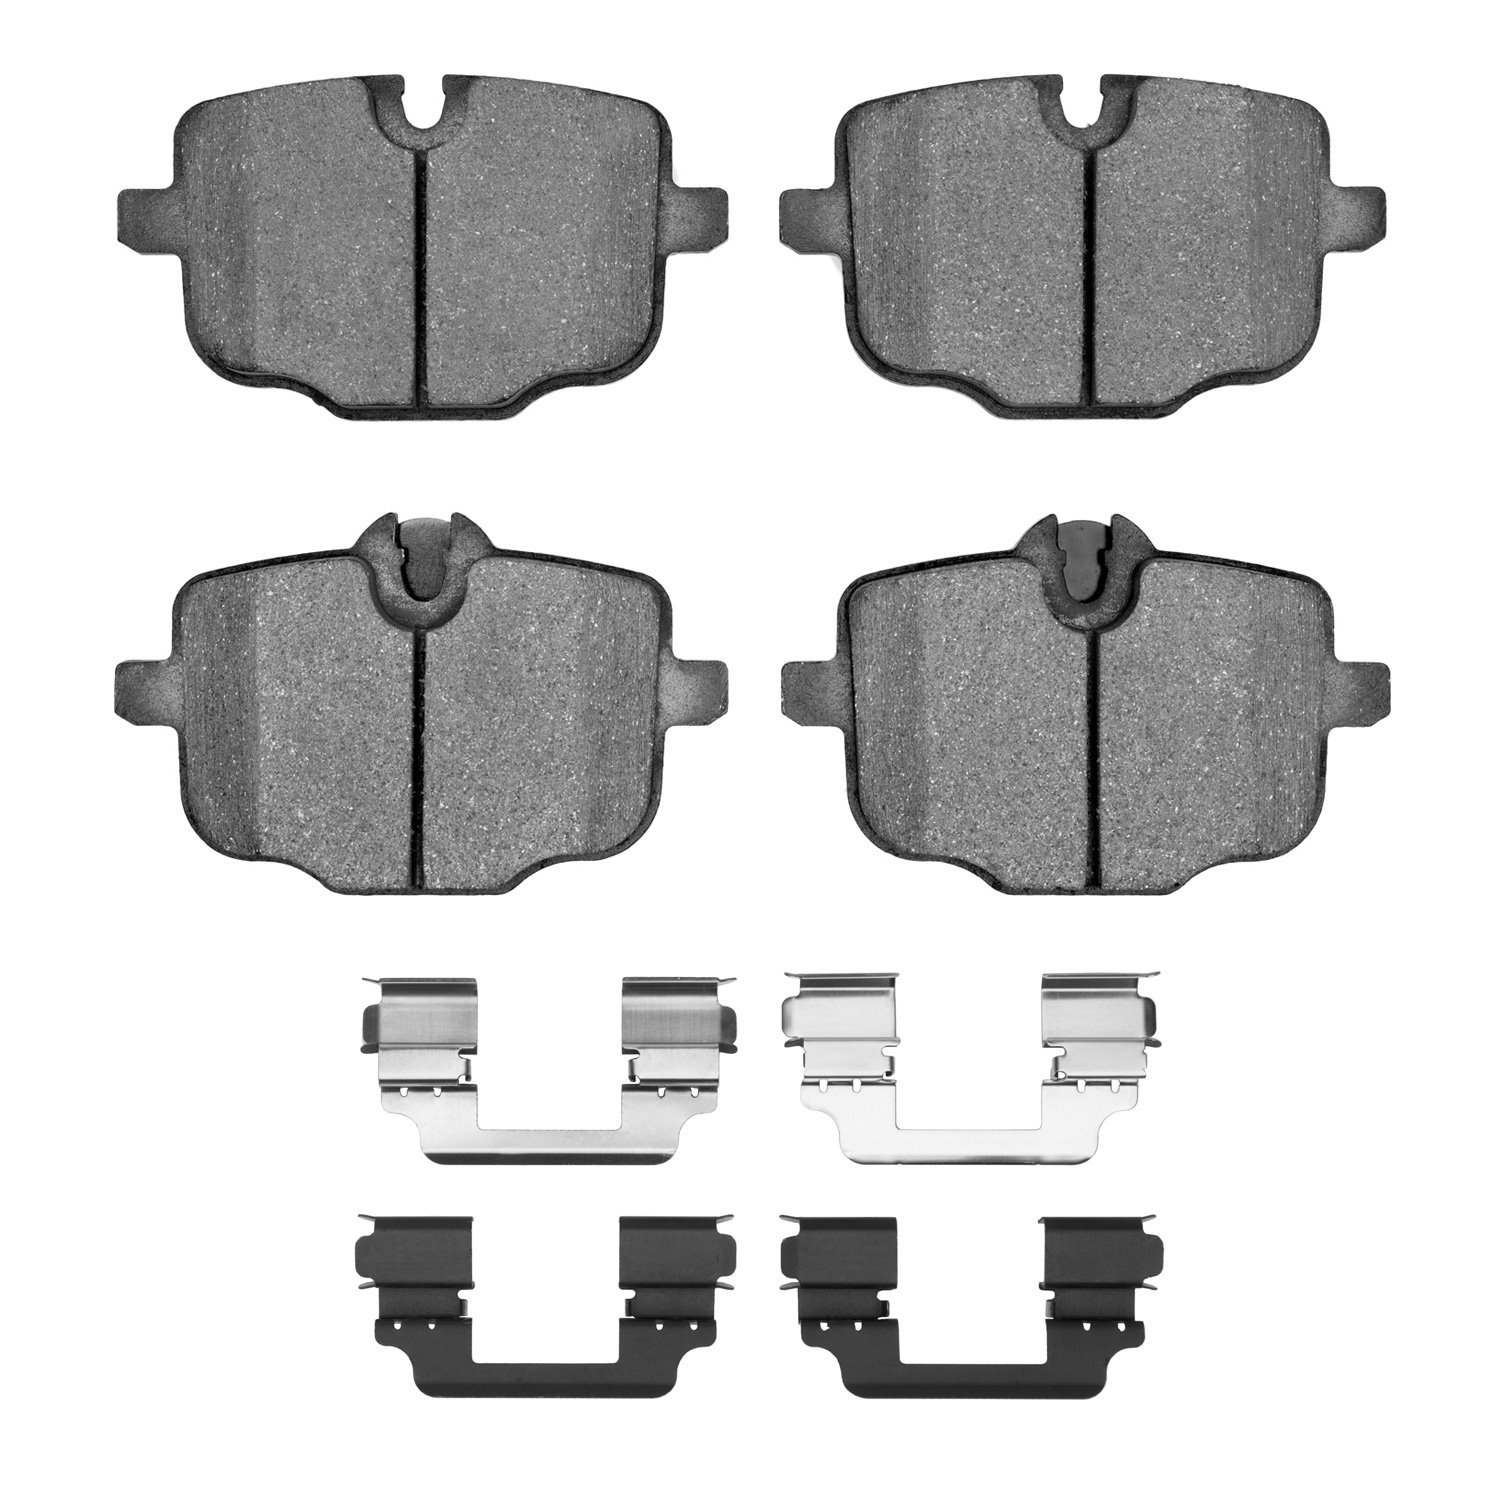 1600-1850-01 5000 Euro Ceramic Brake Pads & Hardware Kit, Fits Select BMW, Position: Rear